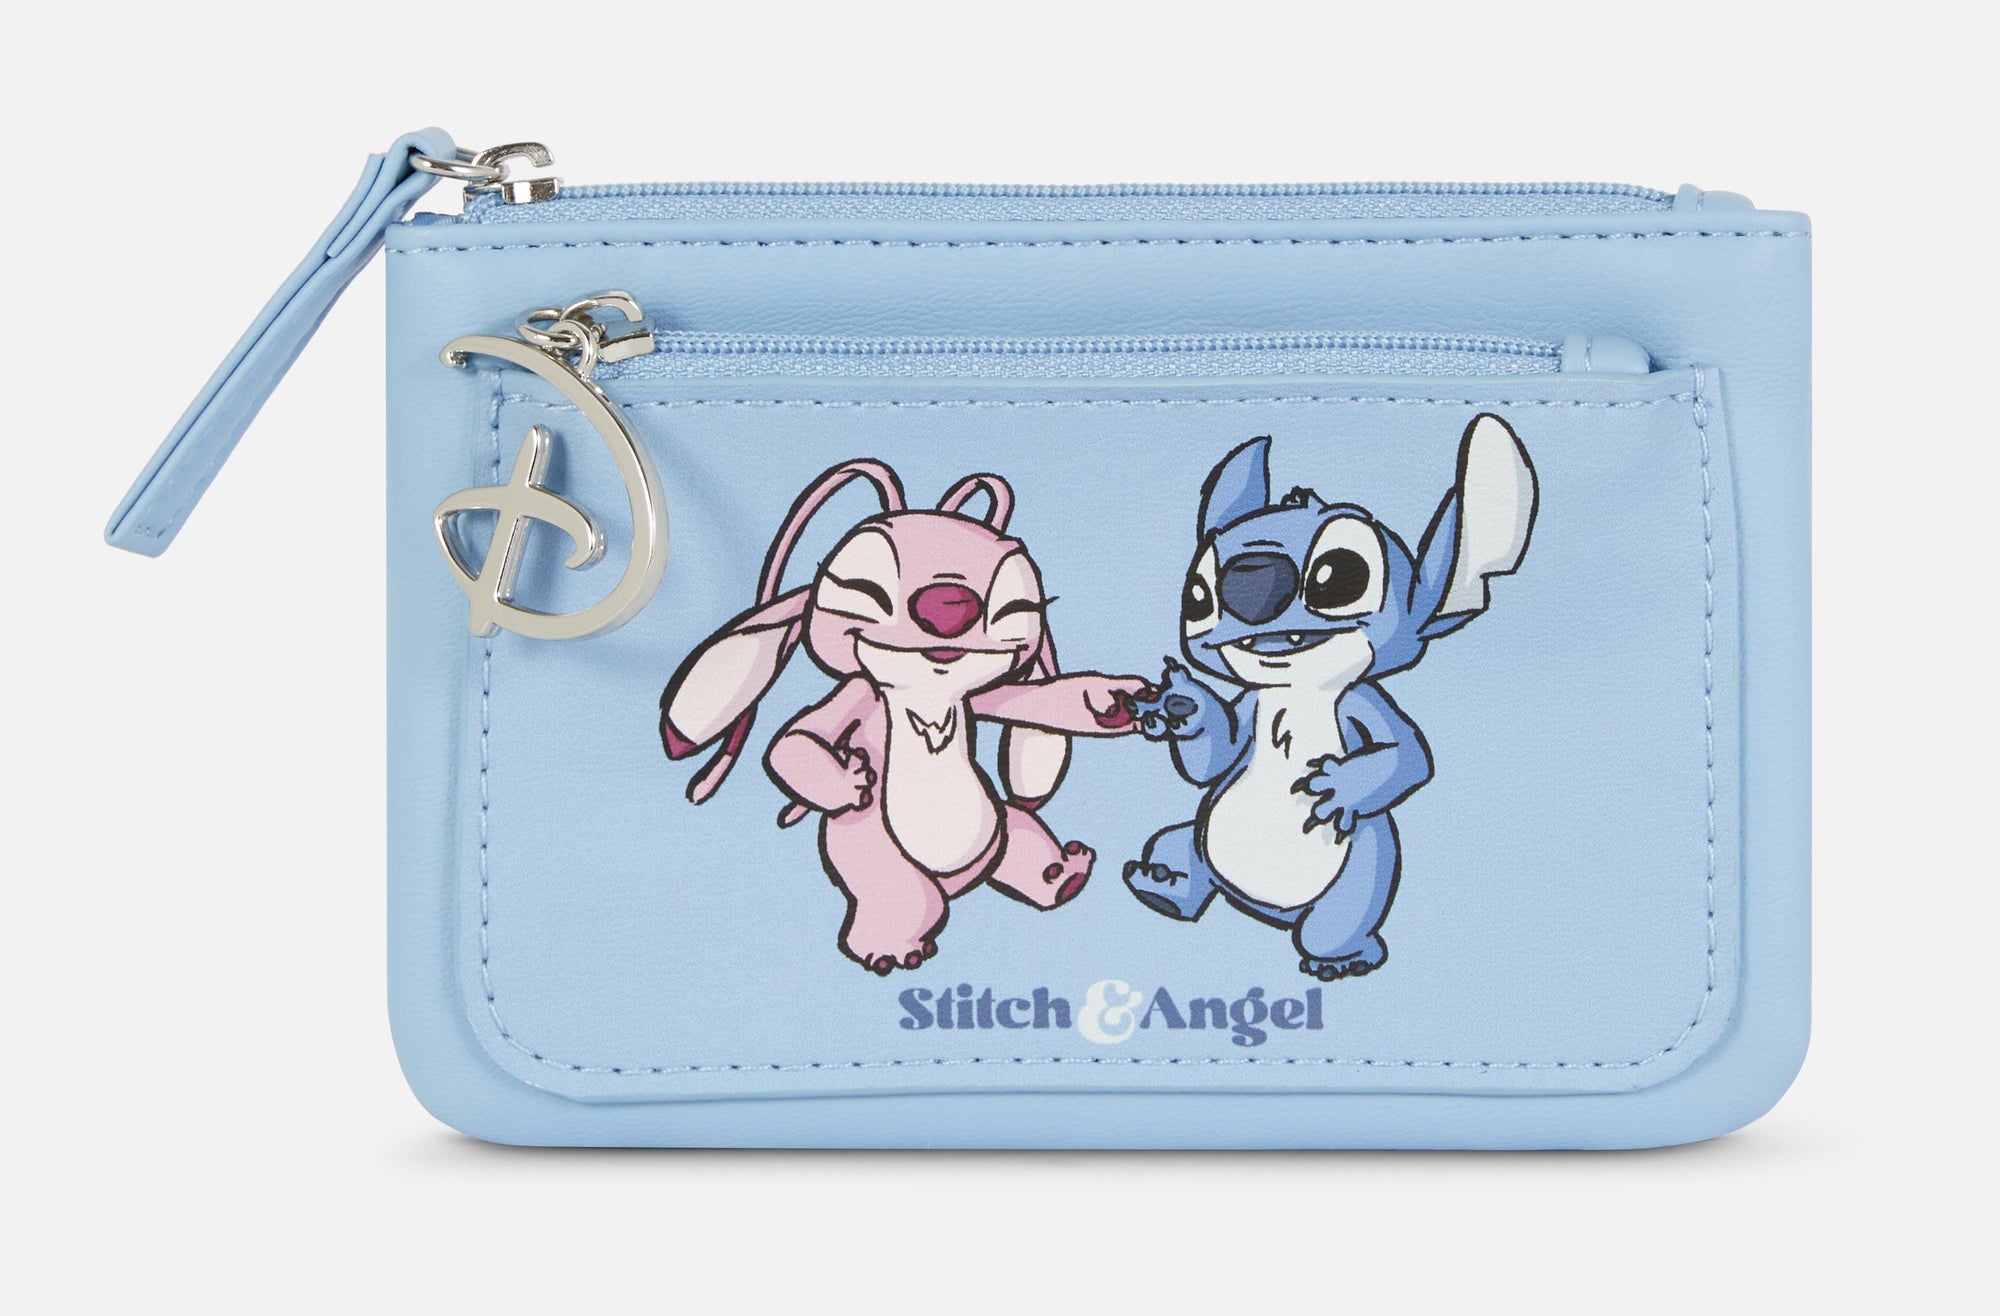 Stitch & Angel Purse